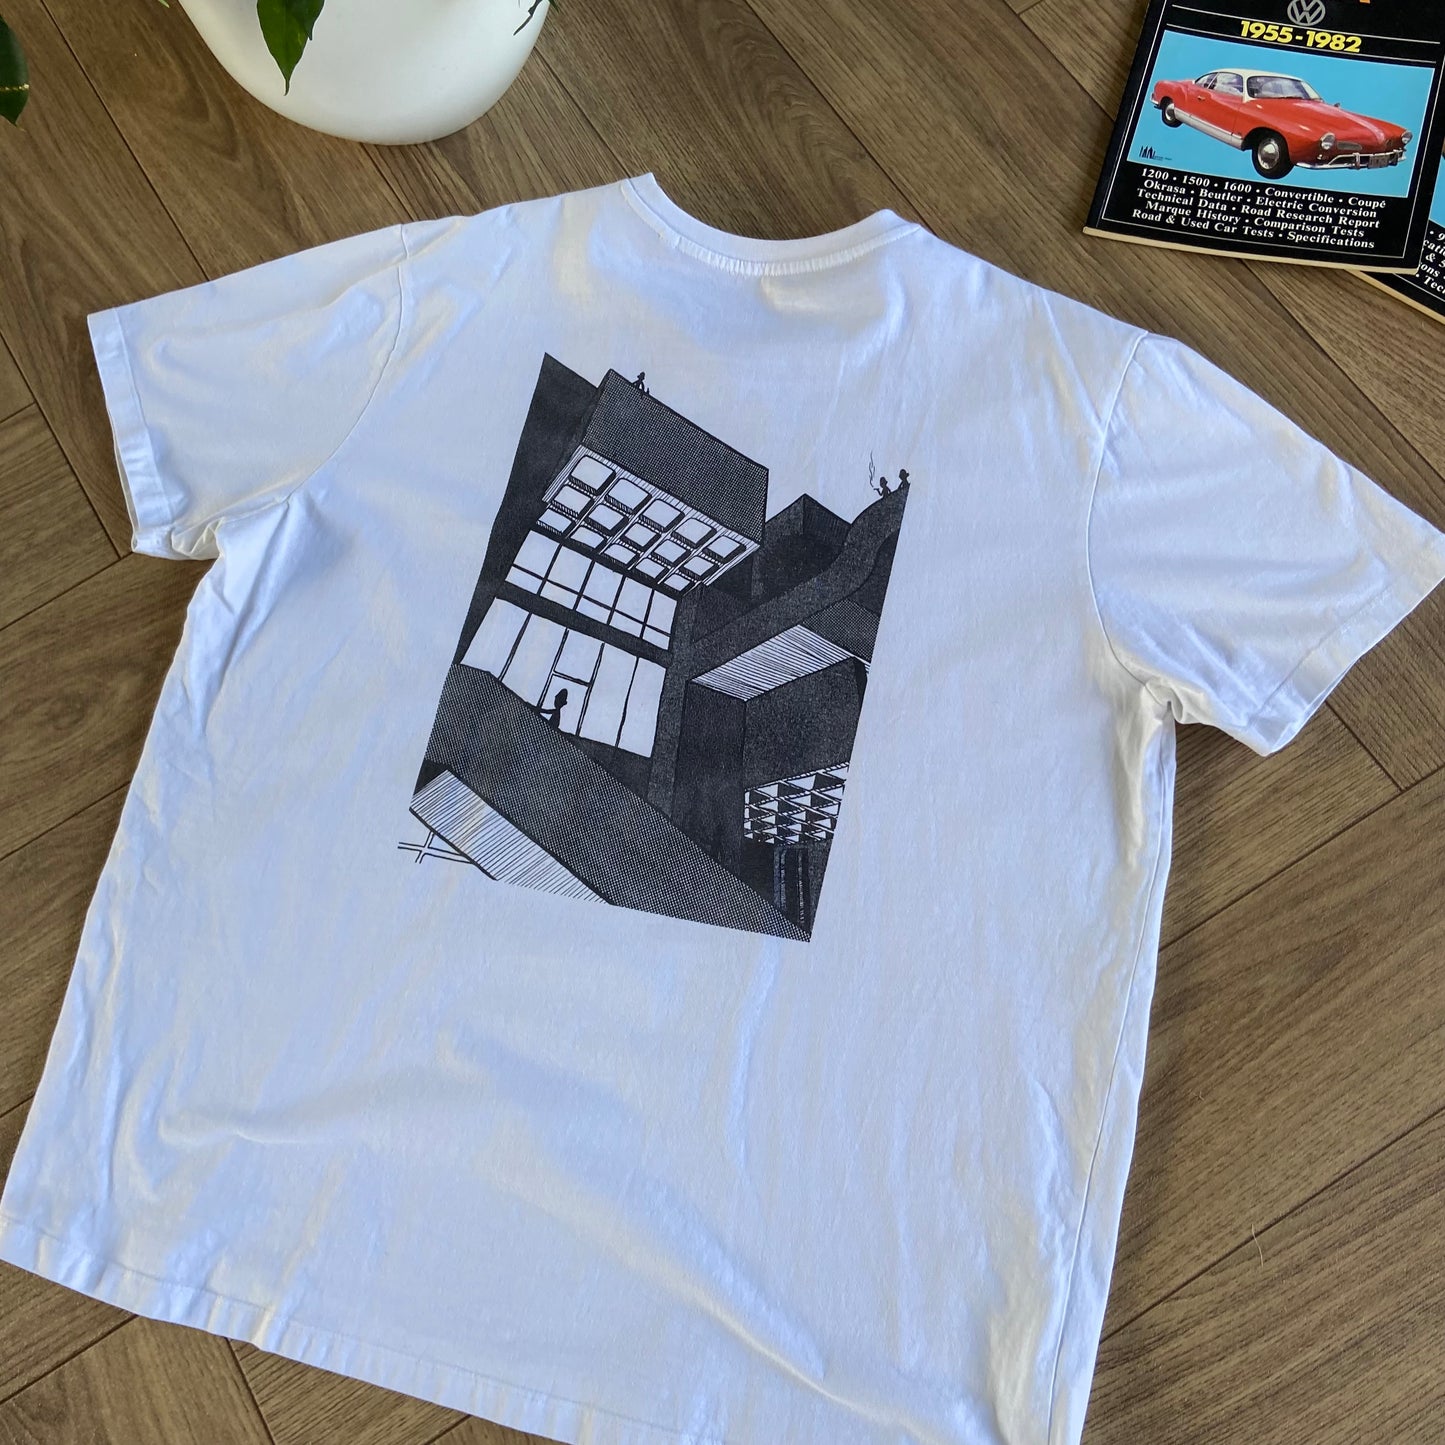 Stingray Reimagined “Barbican” T Shirt, Size XXL White